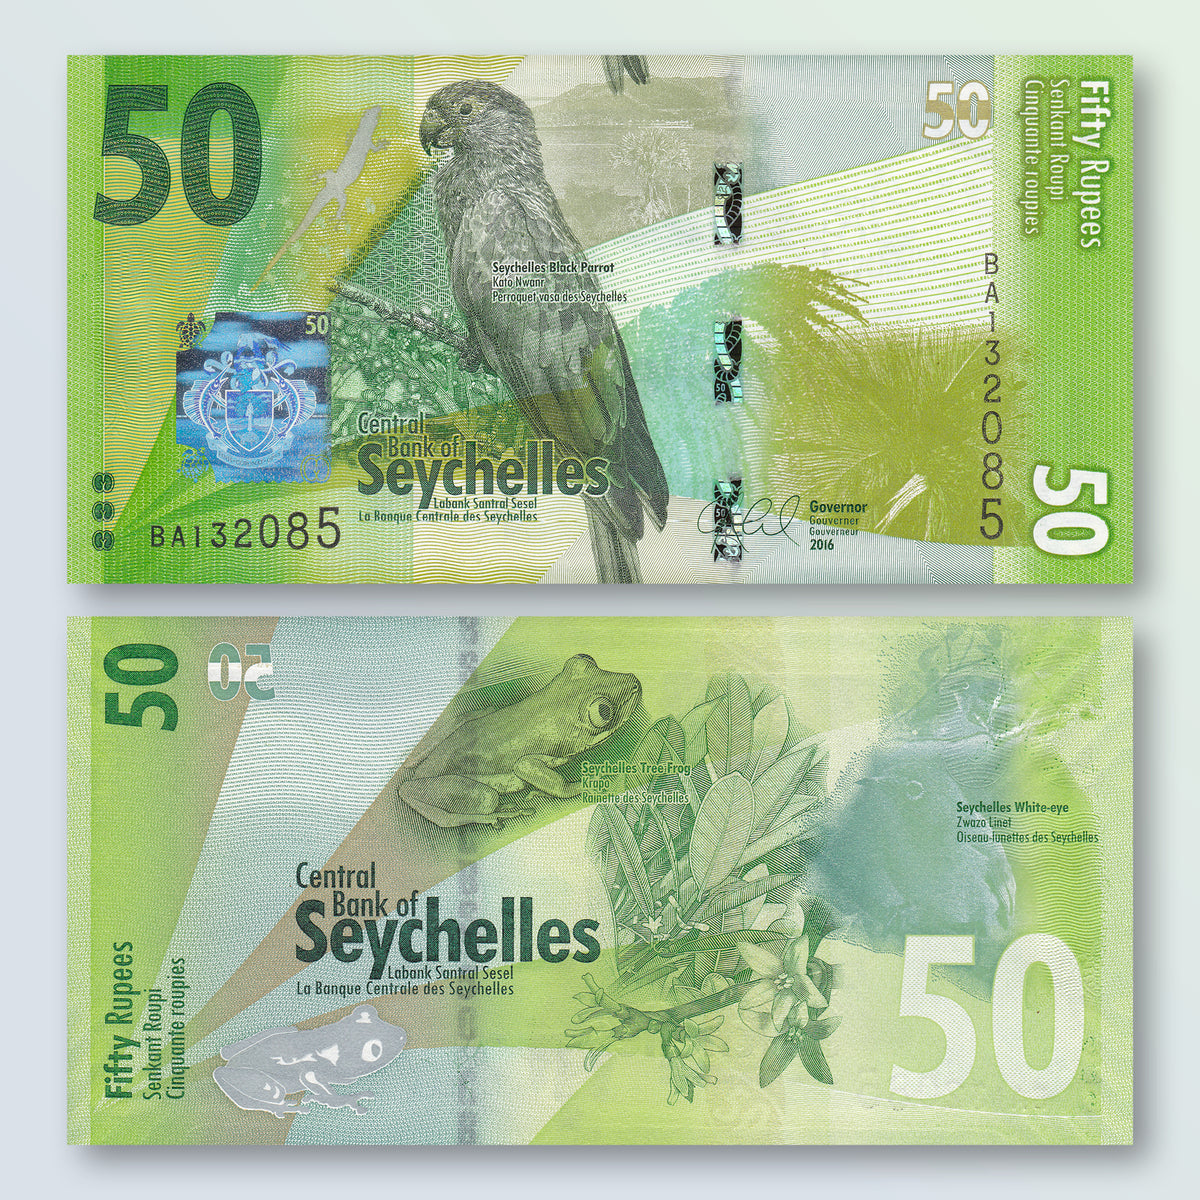 Seychelles 50 Rupees, 2016, B420a, P49, UNC - Robert's World Money - World Banknotes